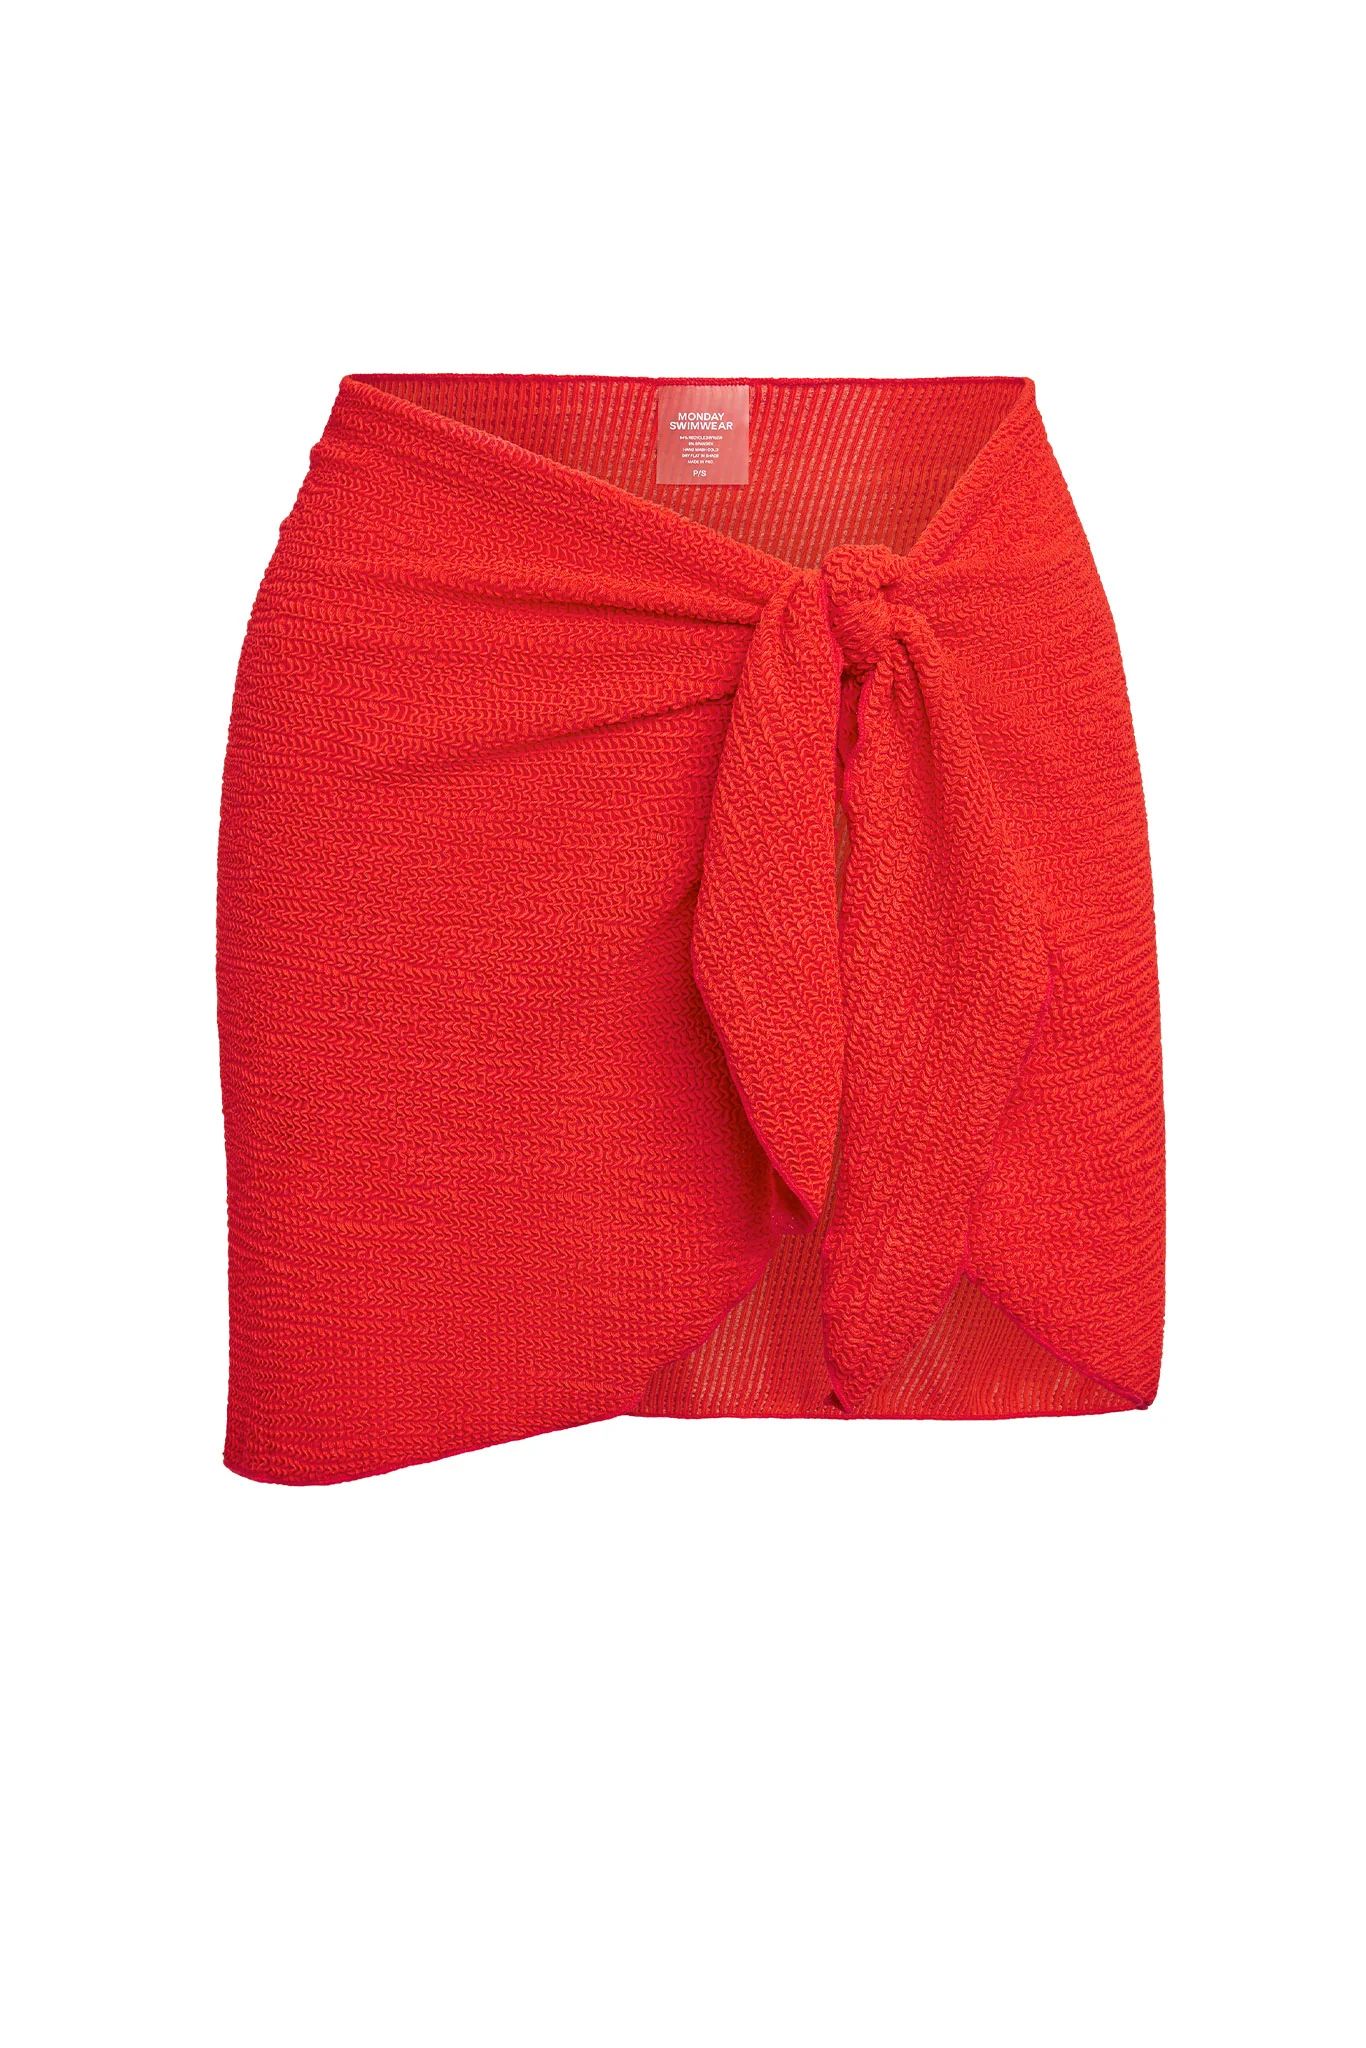 St. Barth's Skirt - Chili Pepper Crinkle | Monday Swimwear